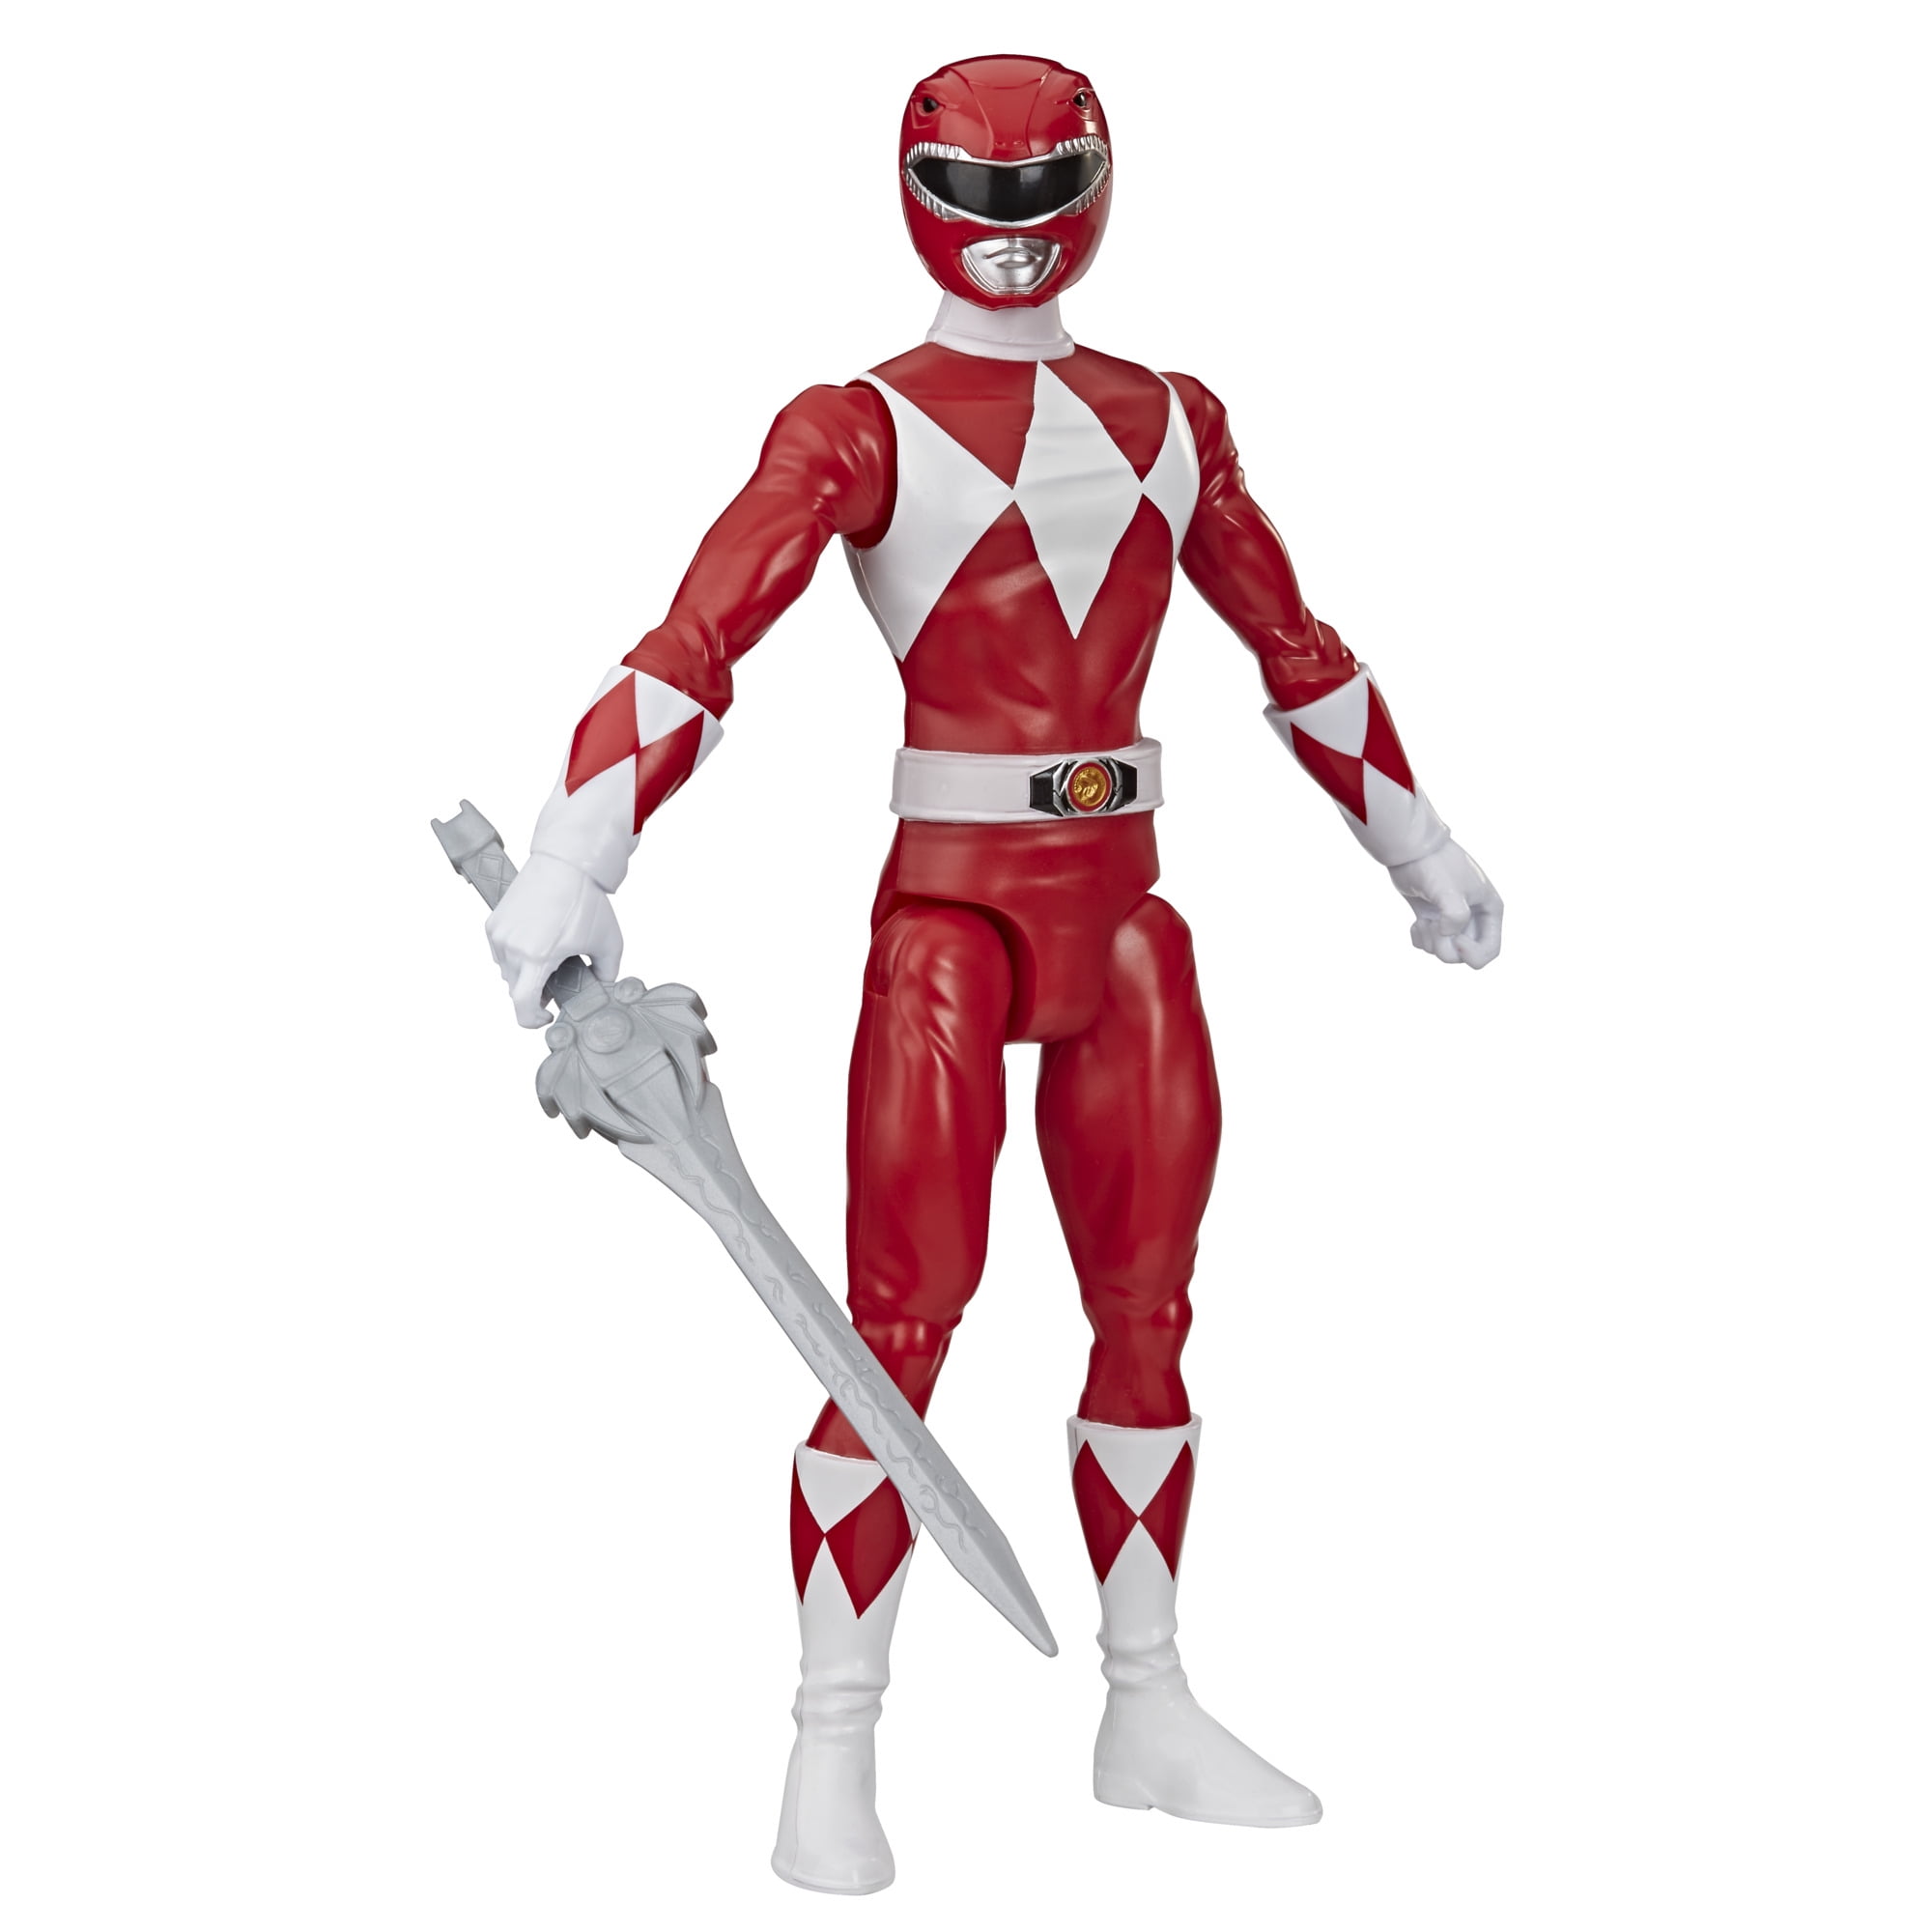 POWER RANGERS LA FOUDRE COLLECTION Mighty Morphin Red Ranger Figure en stock!!! 